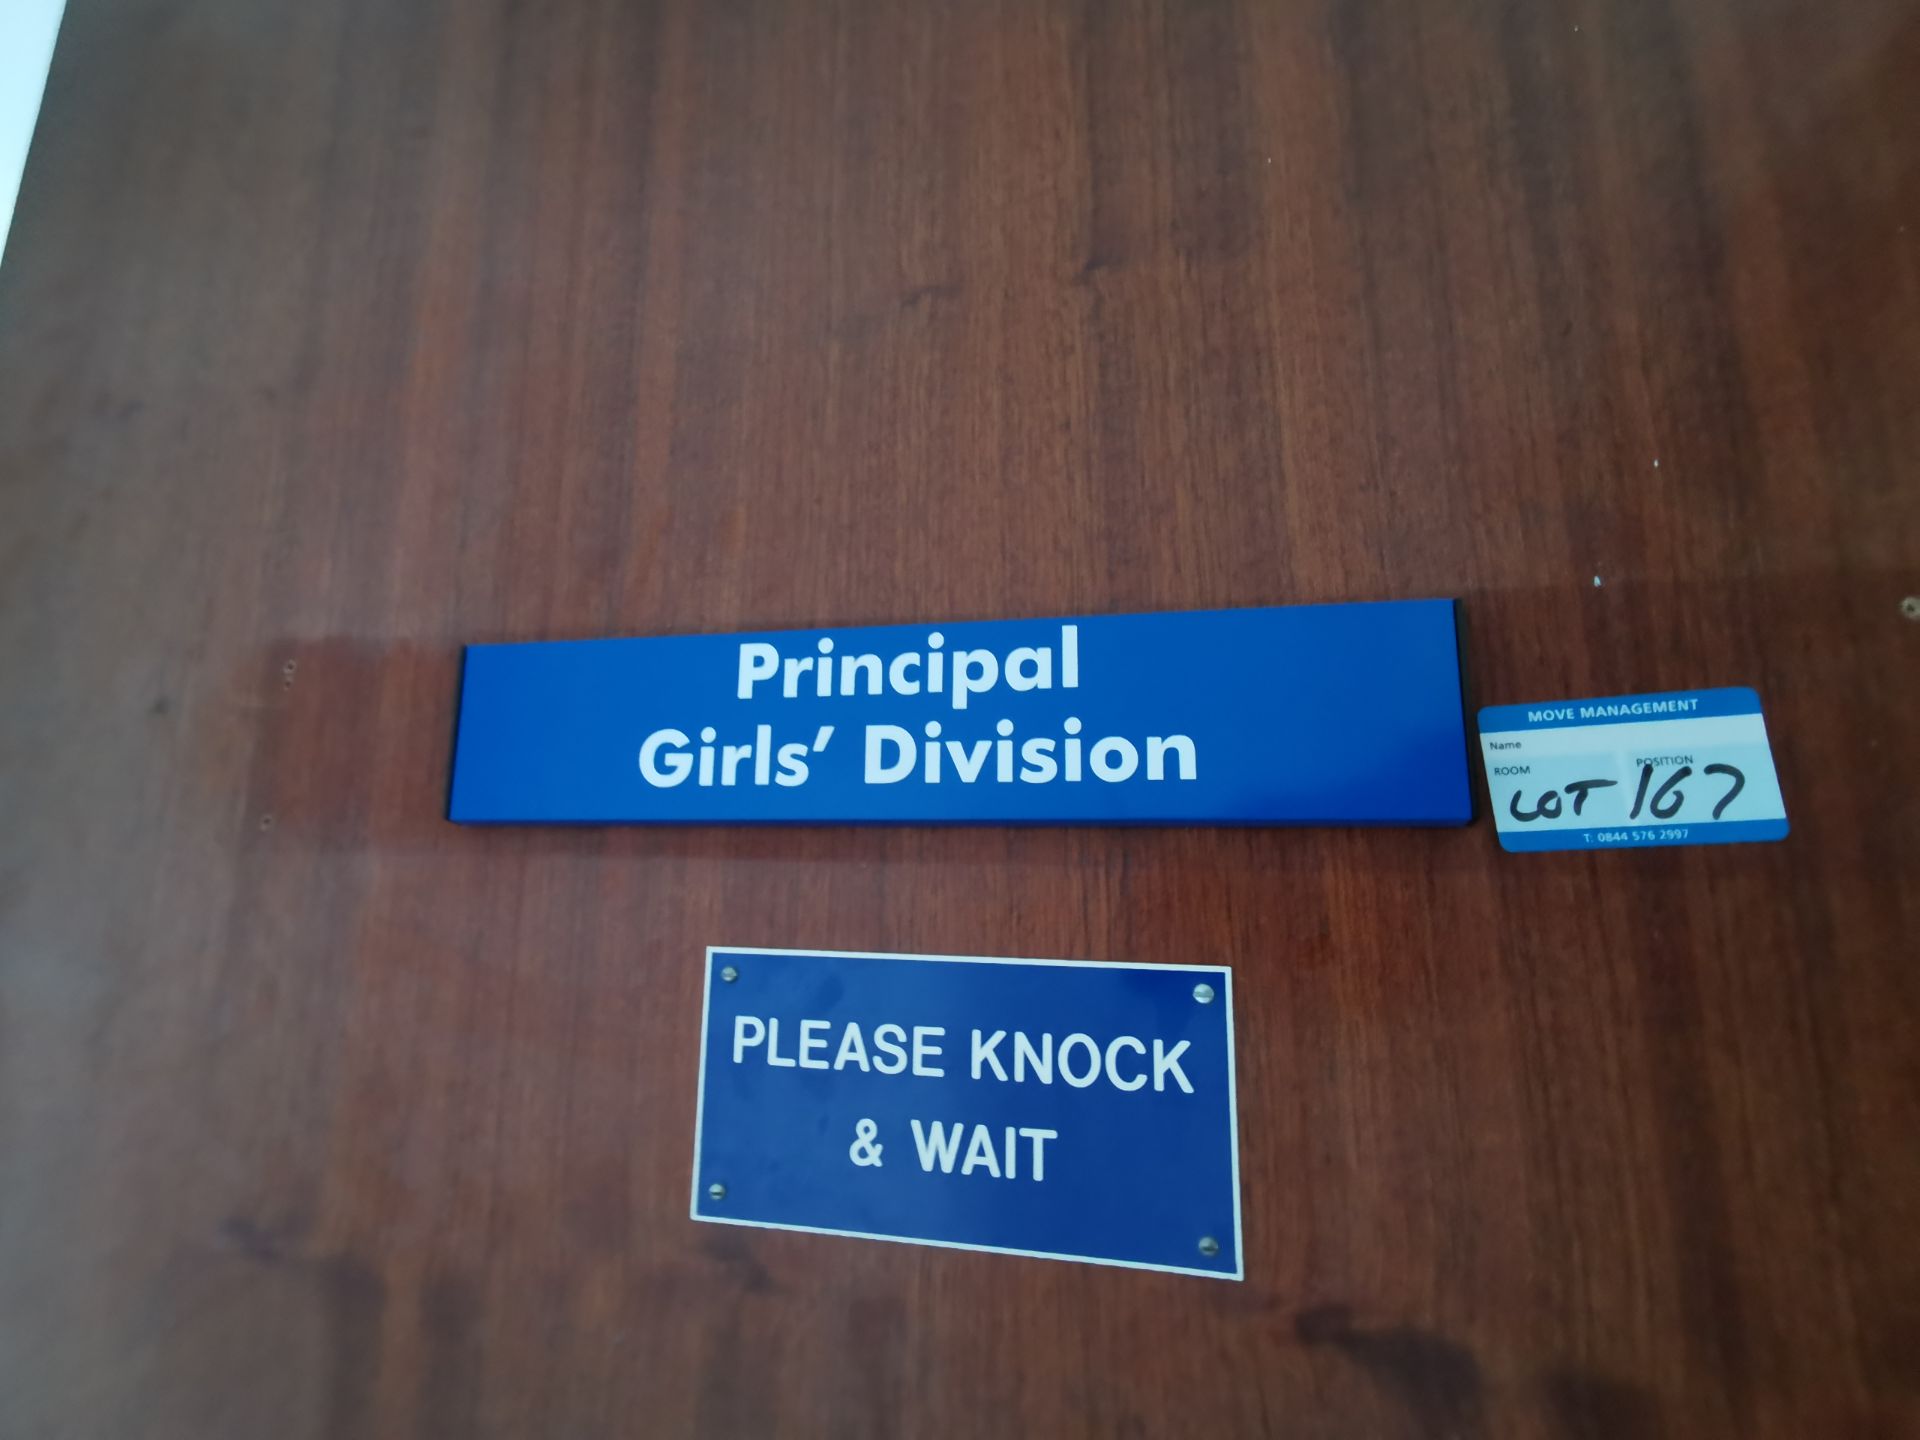 King's 'Principal Girls Division' door sign